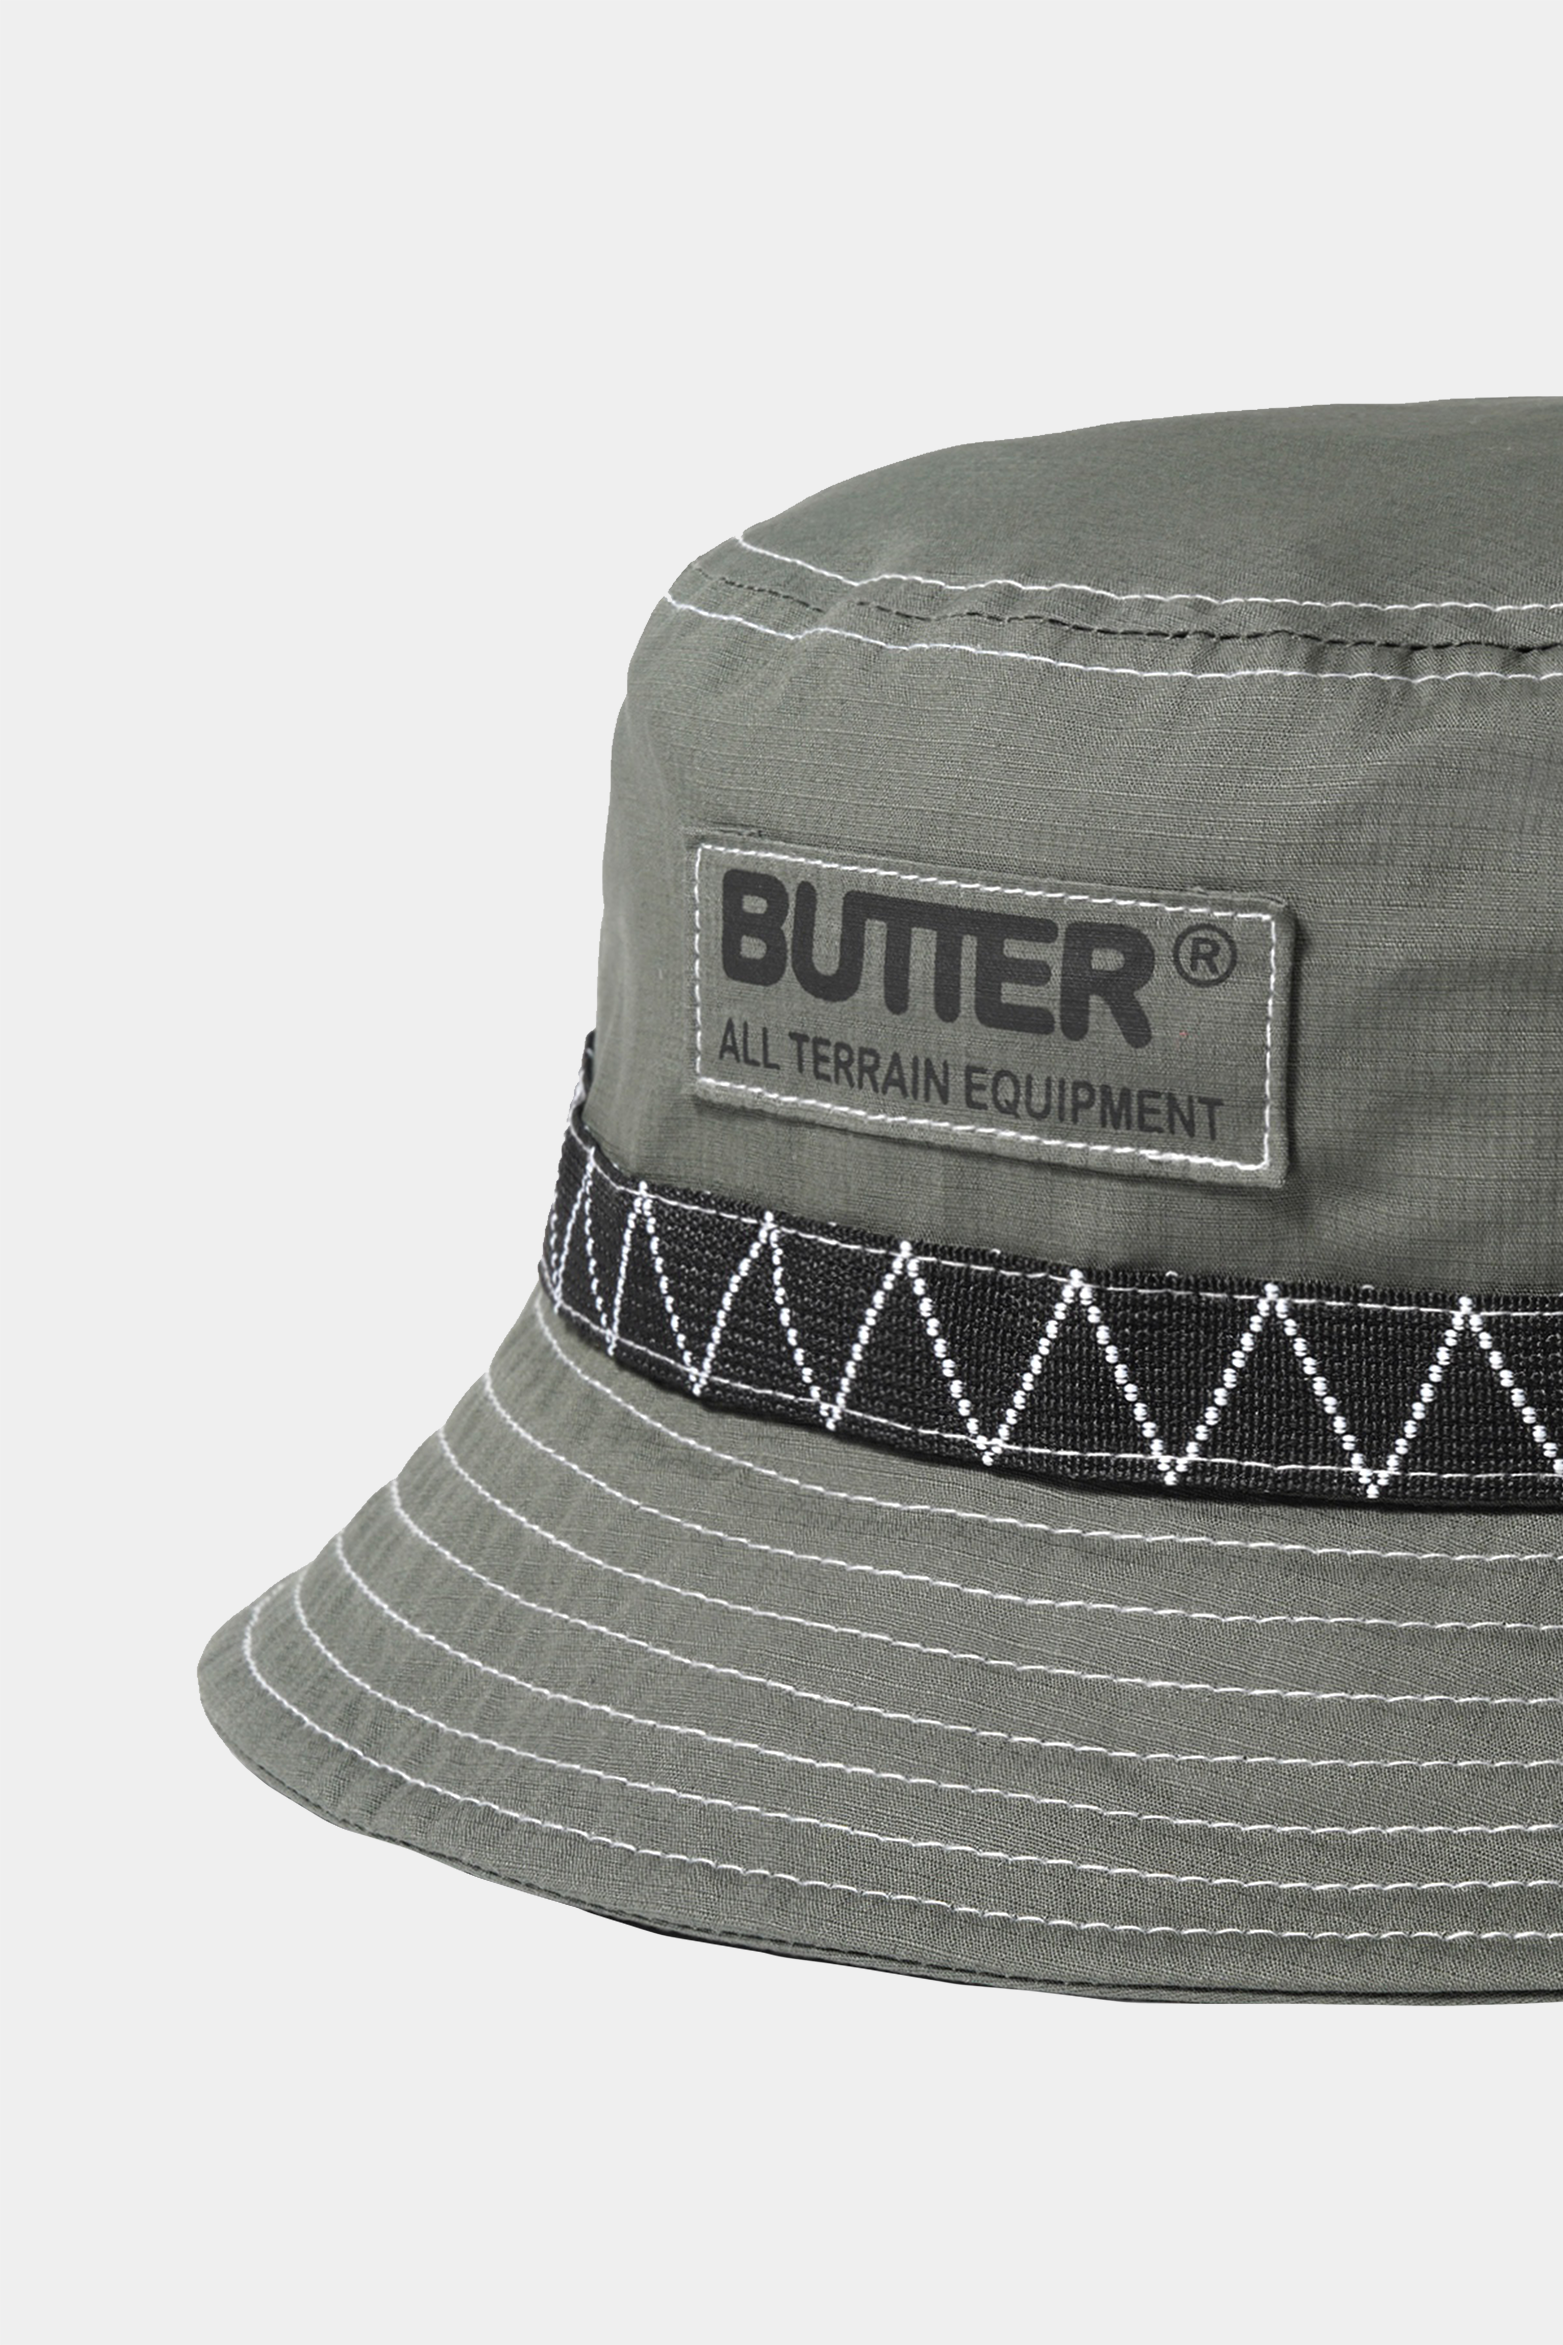 Selectshop FRAME - BUTTER GOODS Terrain Contrast Stitch Bucket Hat All-Accessories Concept Store Dubai